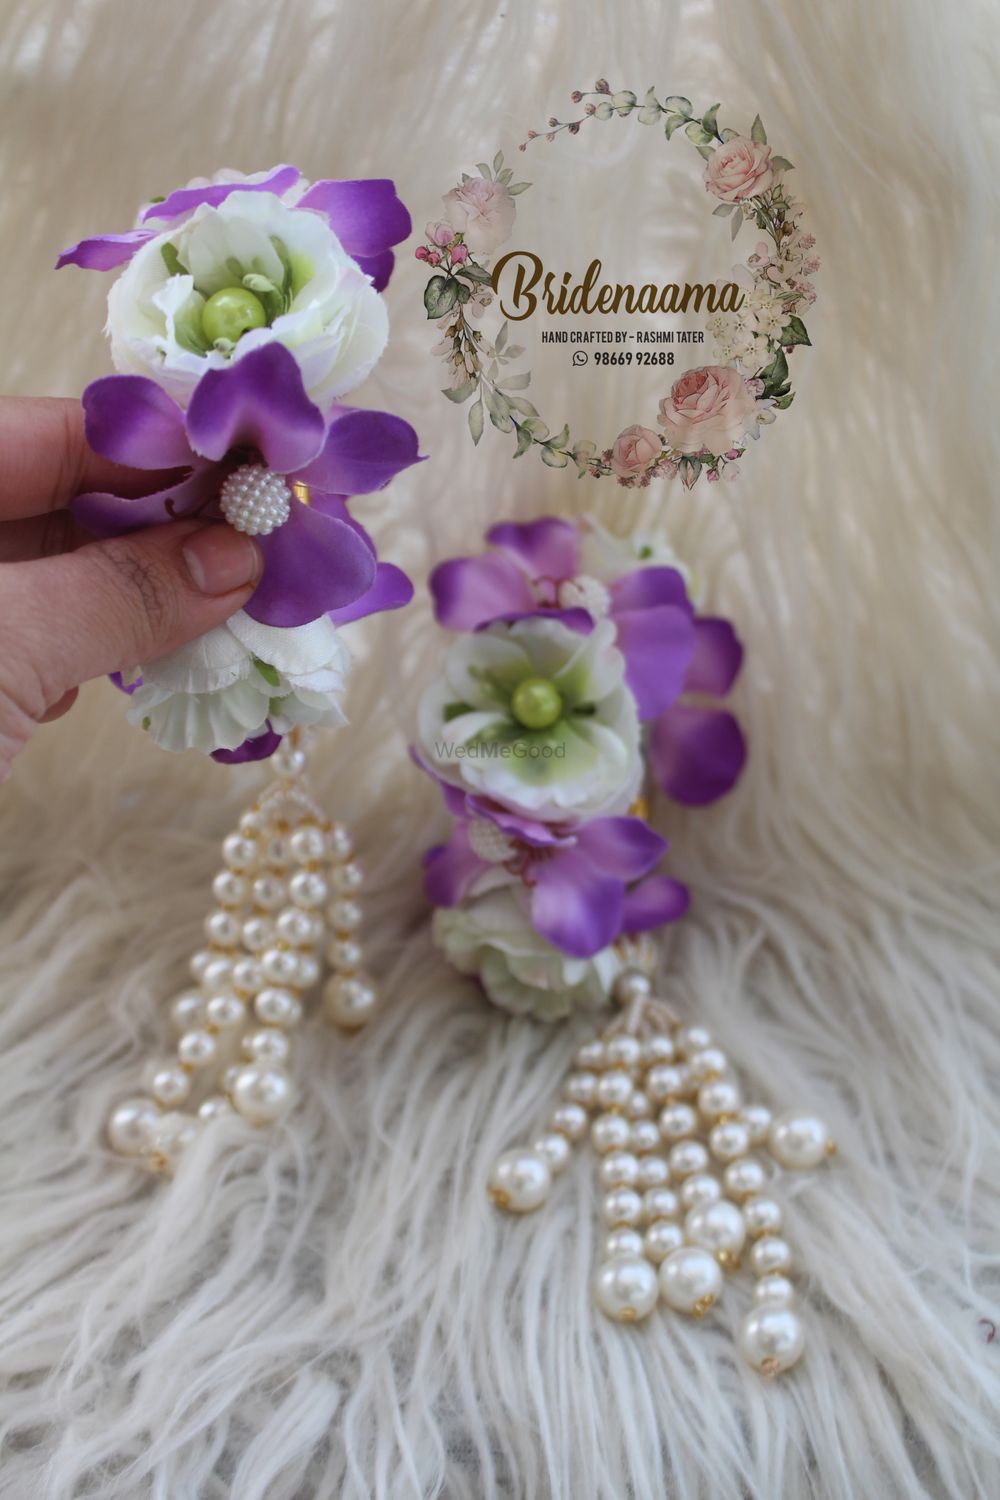 Photo From bridenaama jewellery varients  - By Bridenaama